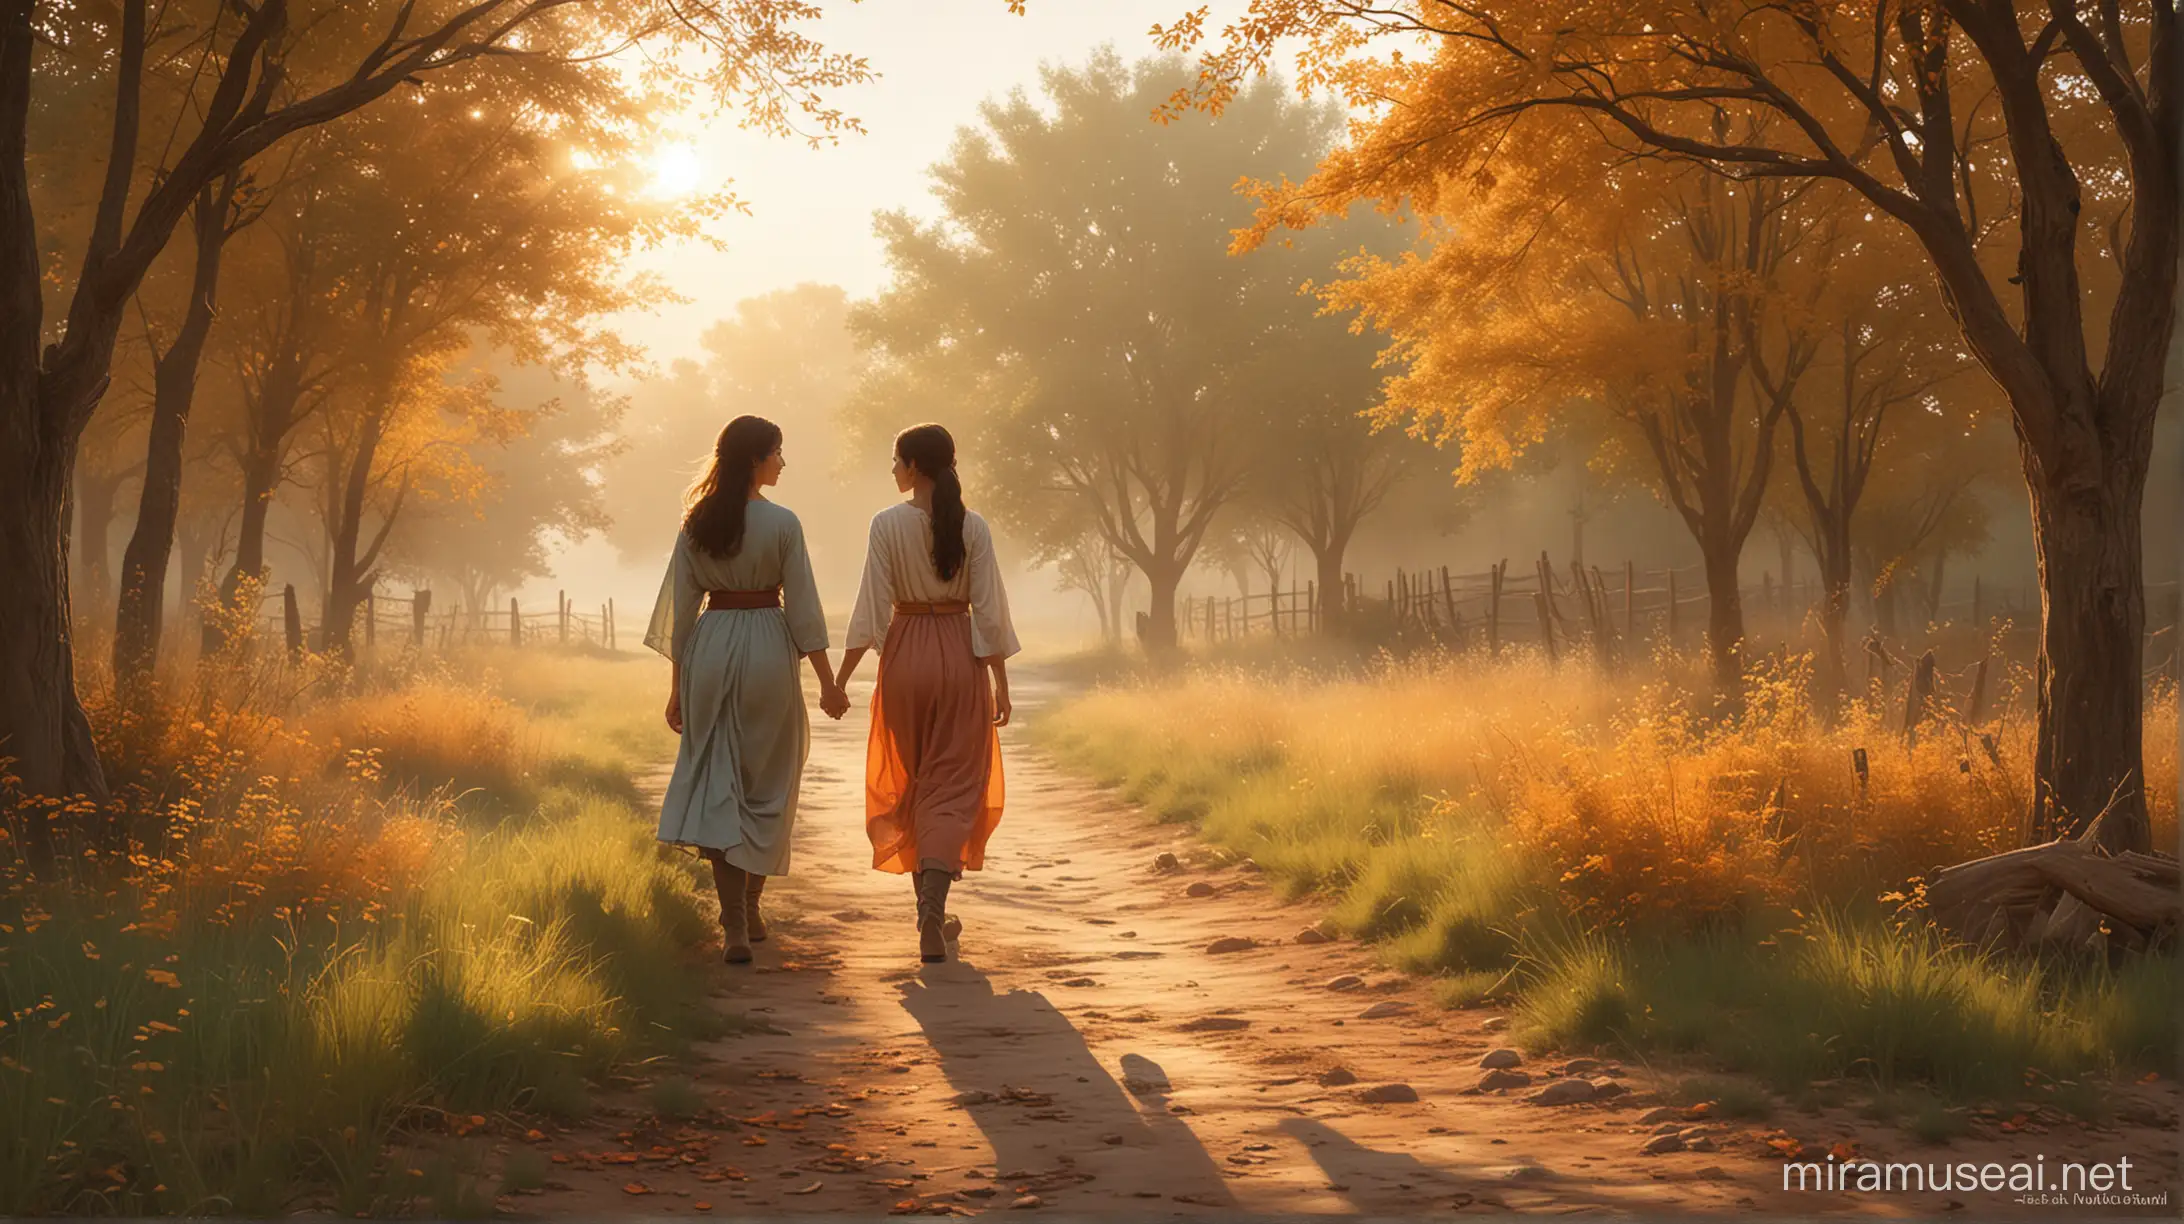 Karo and Girl Walking Home at Sunset in Rustic Village